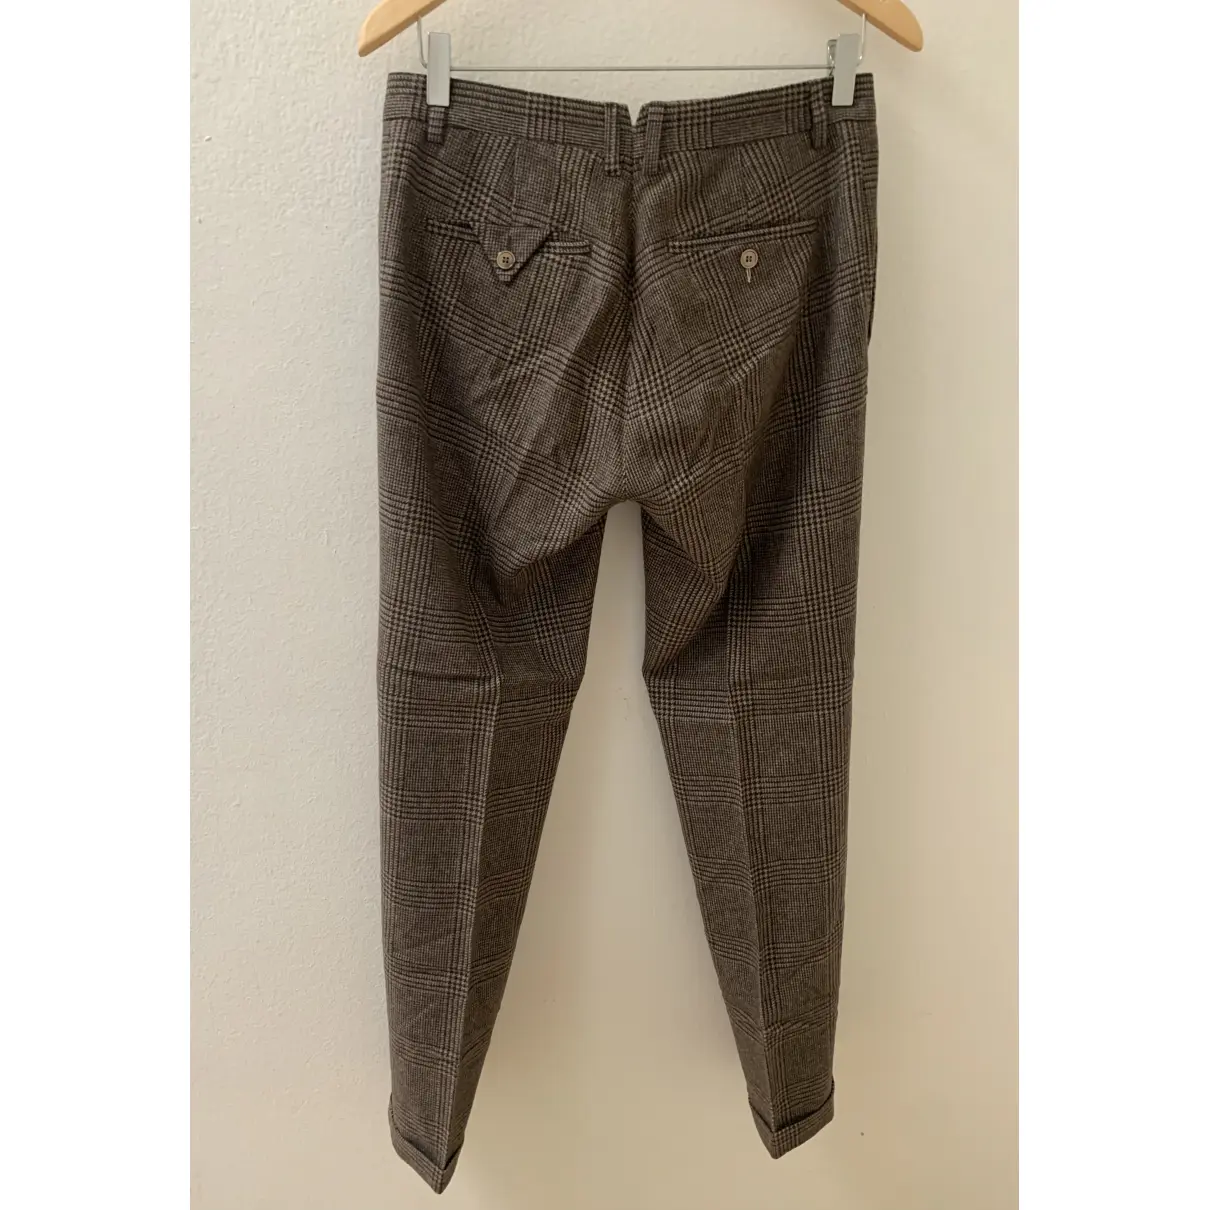 Buy Gant Rugger Wool trousers online